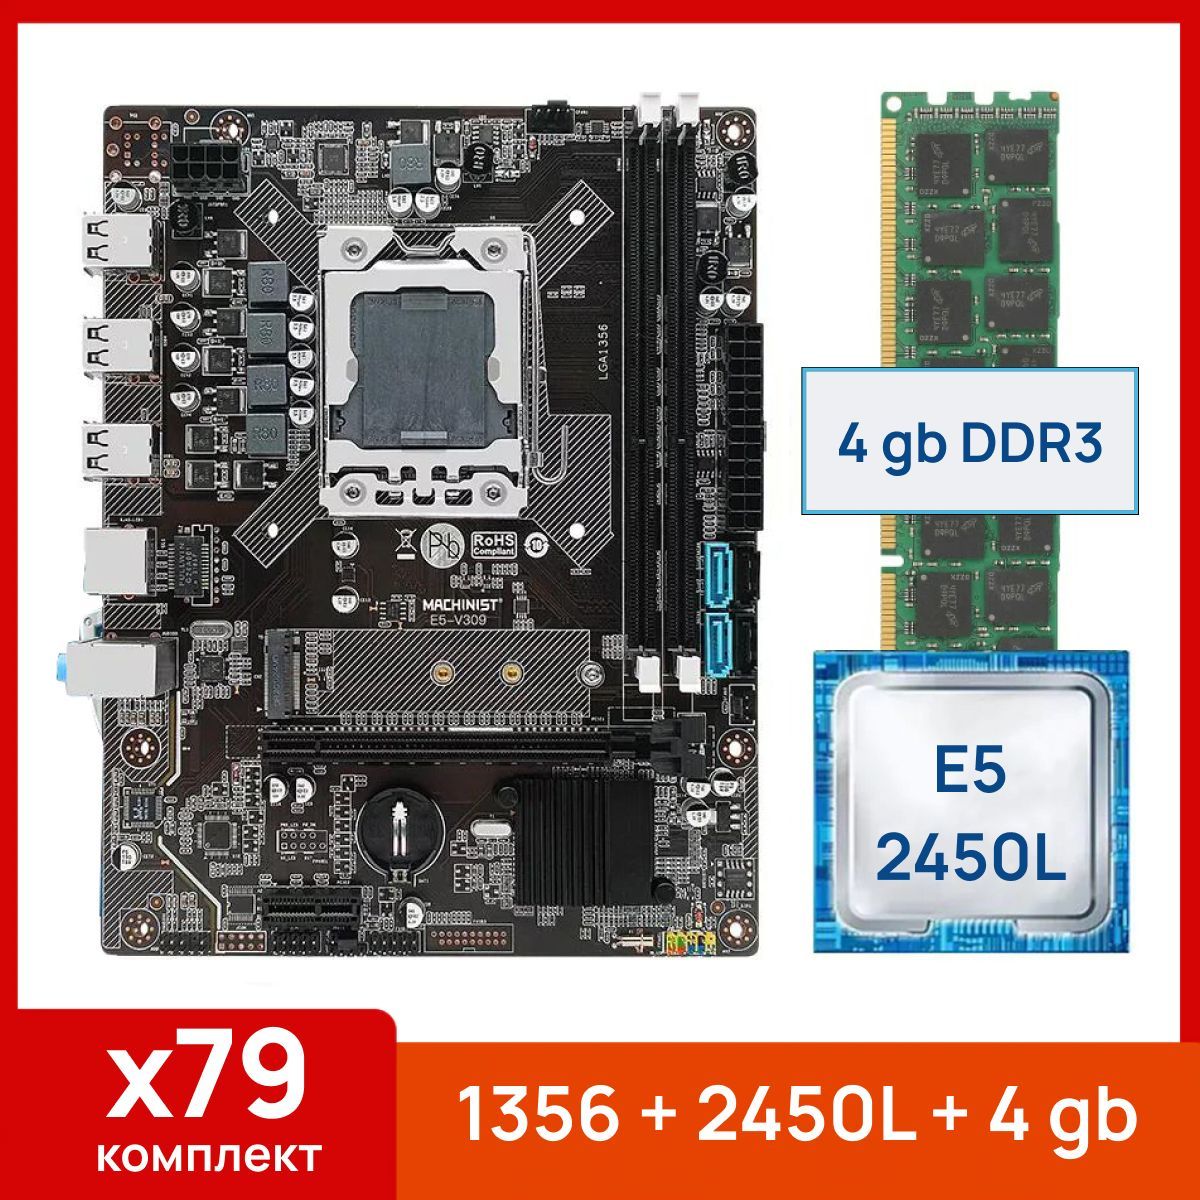 MACHINISTМатеринскаяплата1356+ПроцессорXeonE52450L+4gb(1x4gb)DDR3серверная